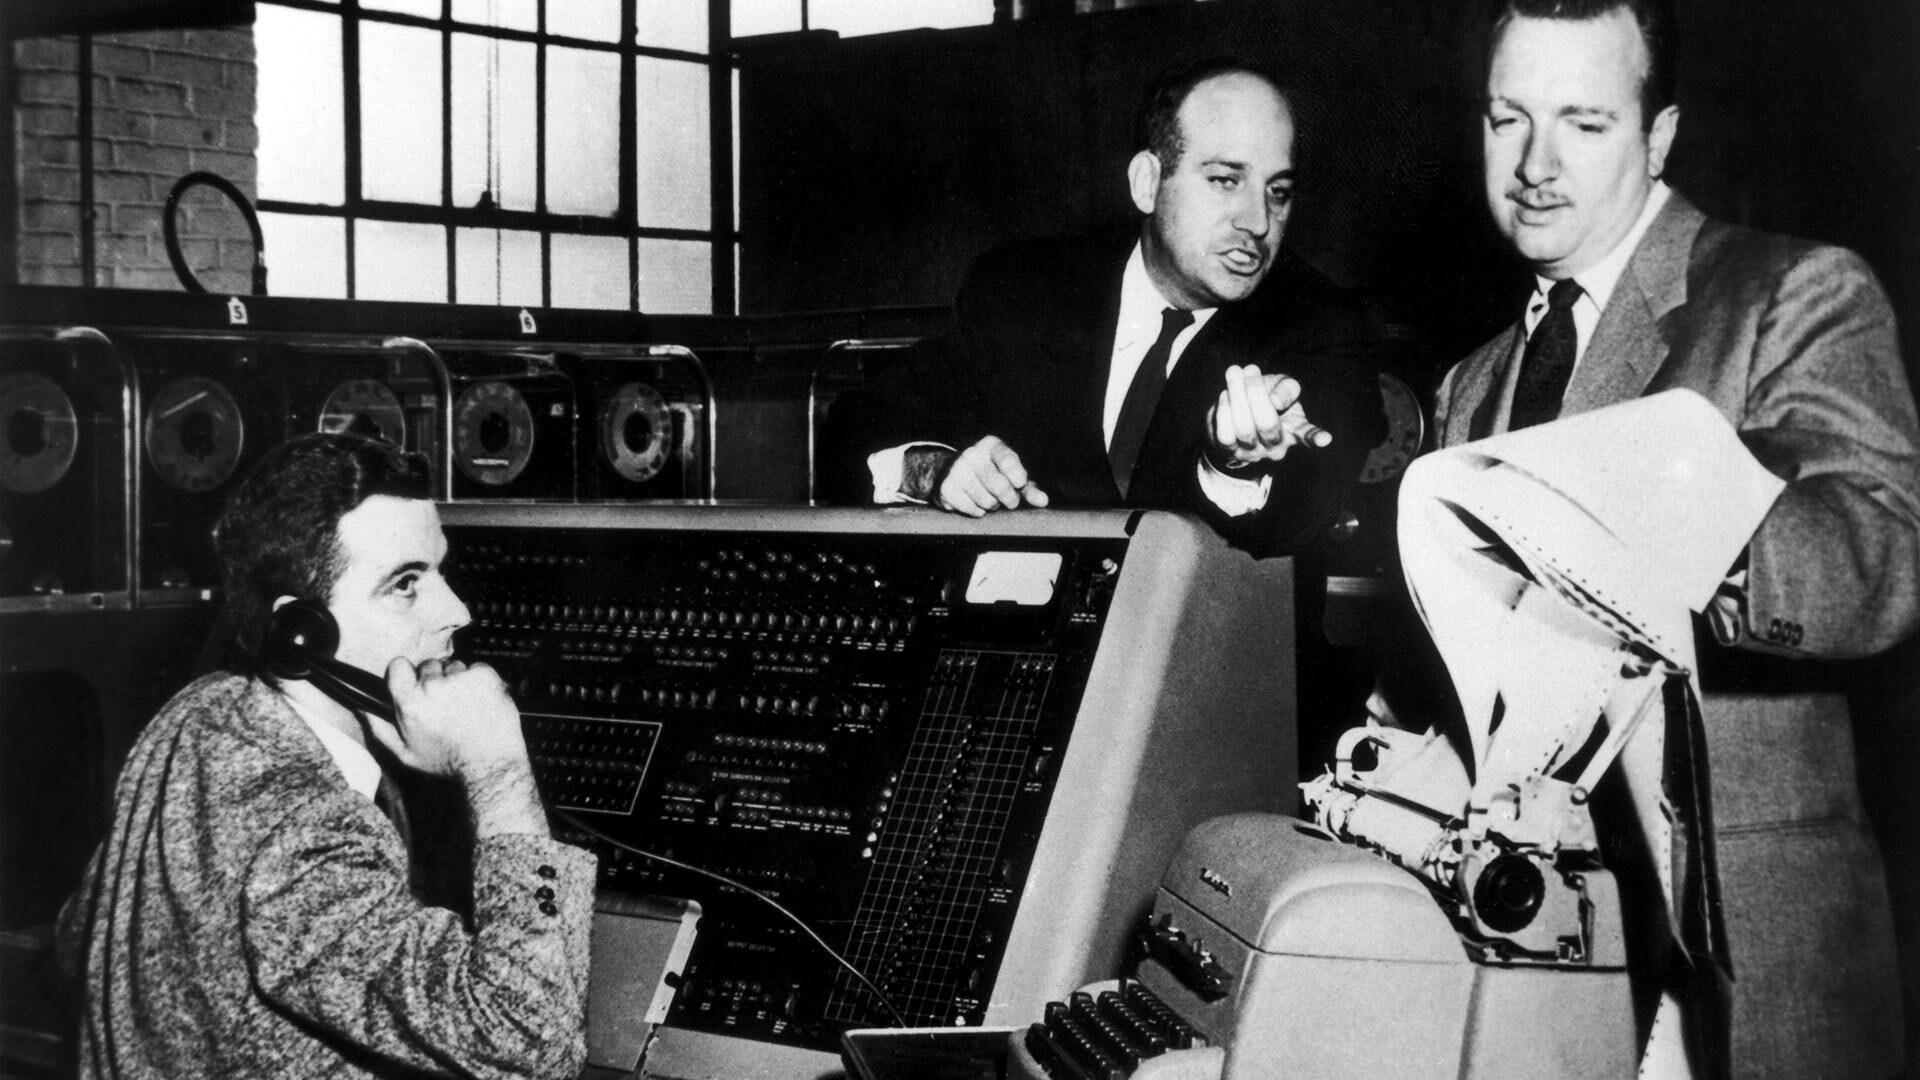 Presper Eckert and Walter Cronkite with UNIVAC